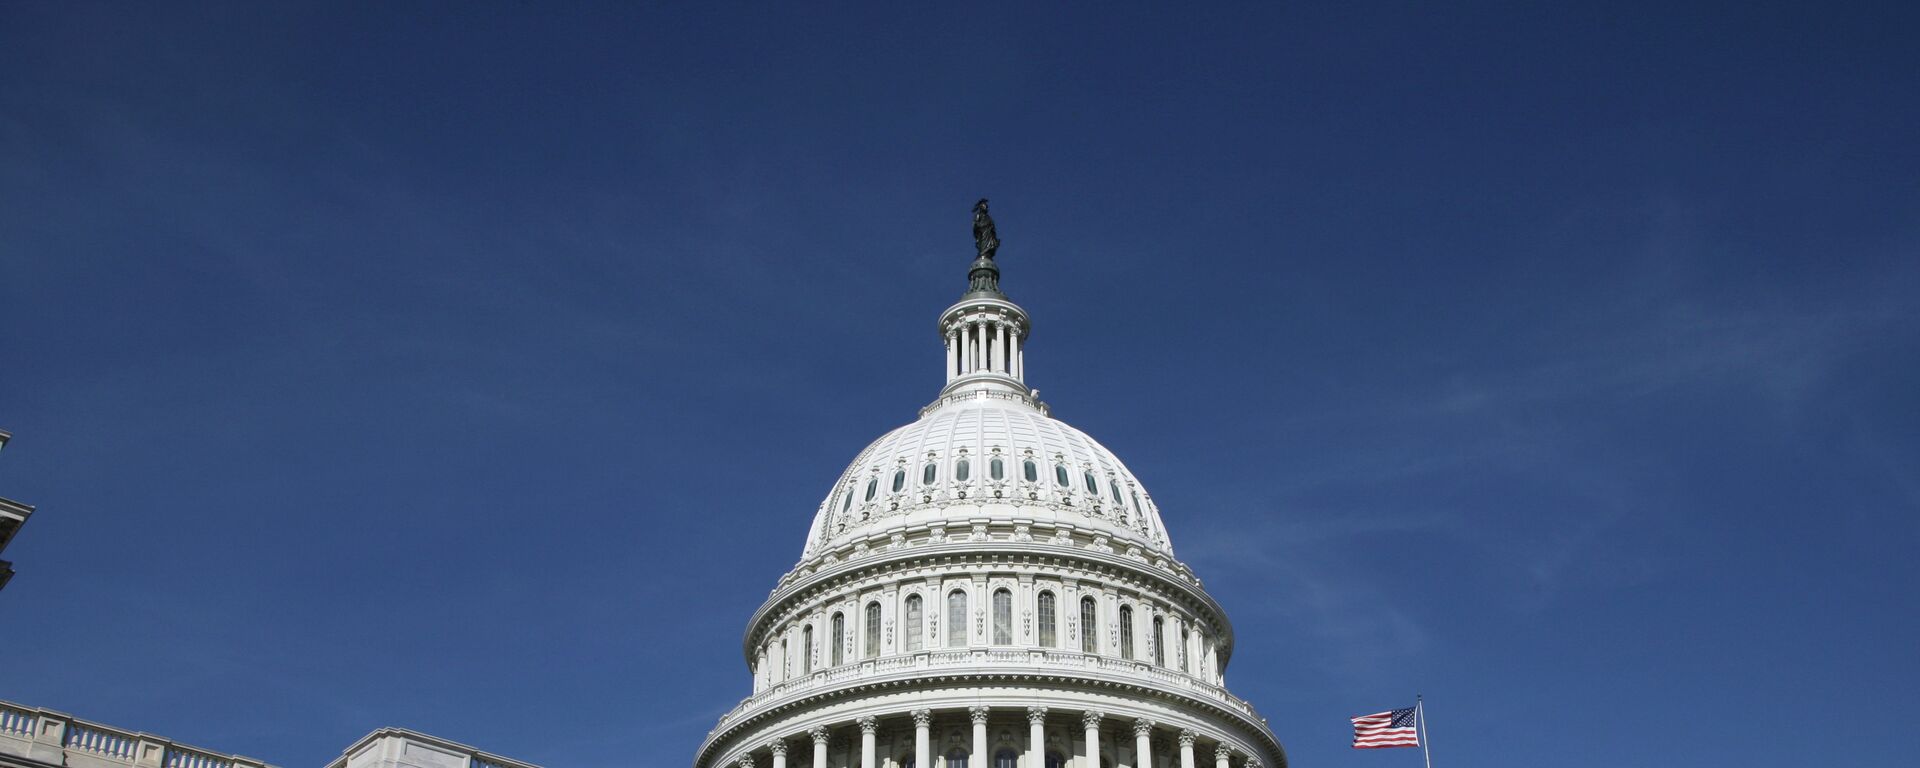 Капитолий (United States Capitol) на Капитолийском холме в Вашингтоне - Sputnik Таджикистан, 1920, 09.12.2021